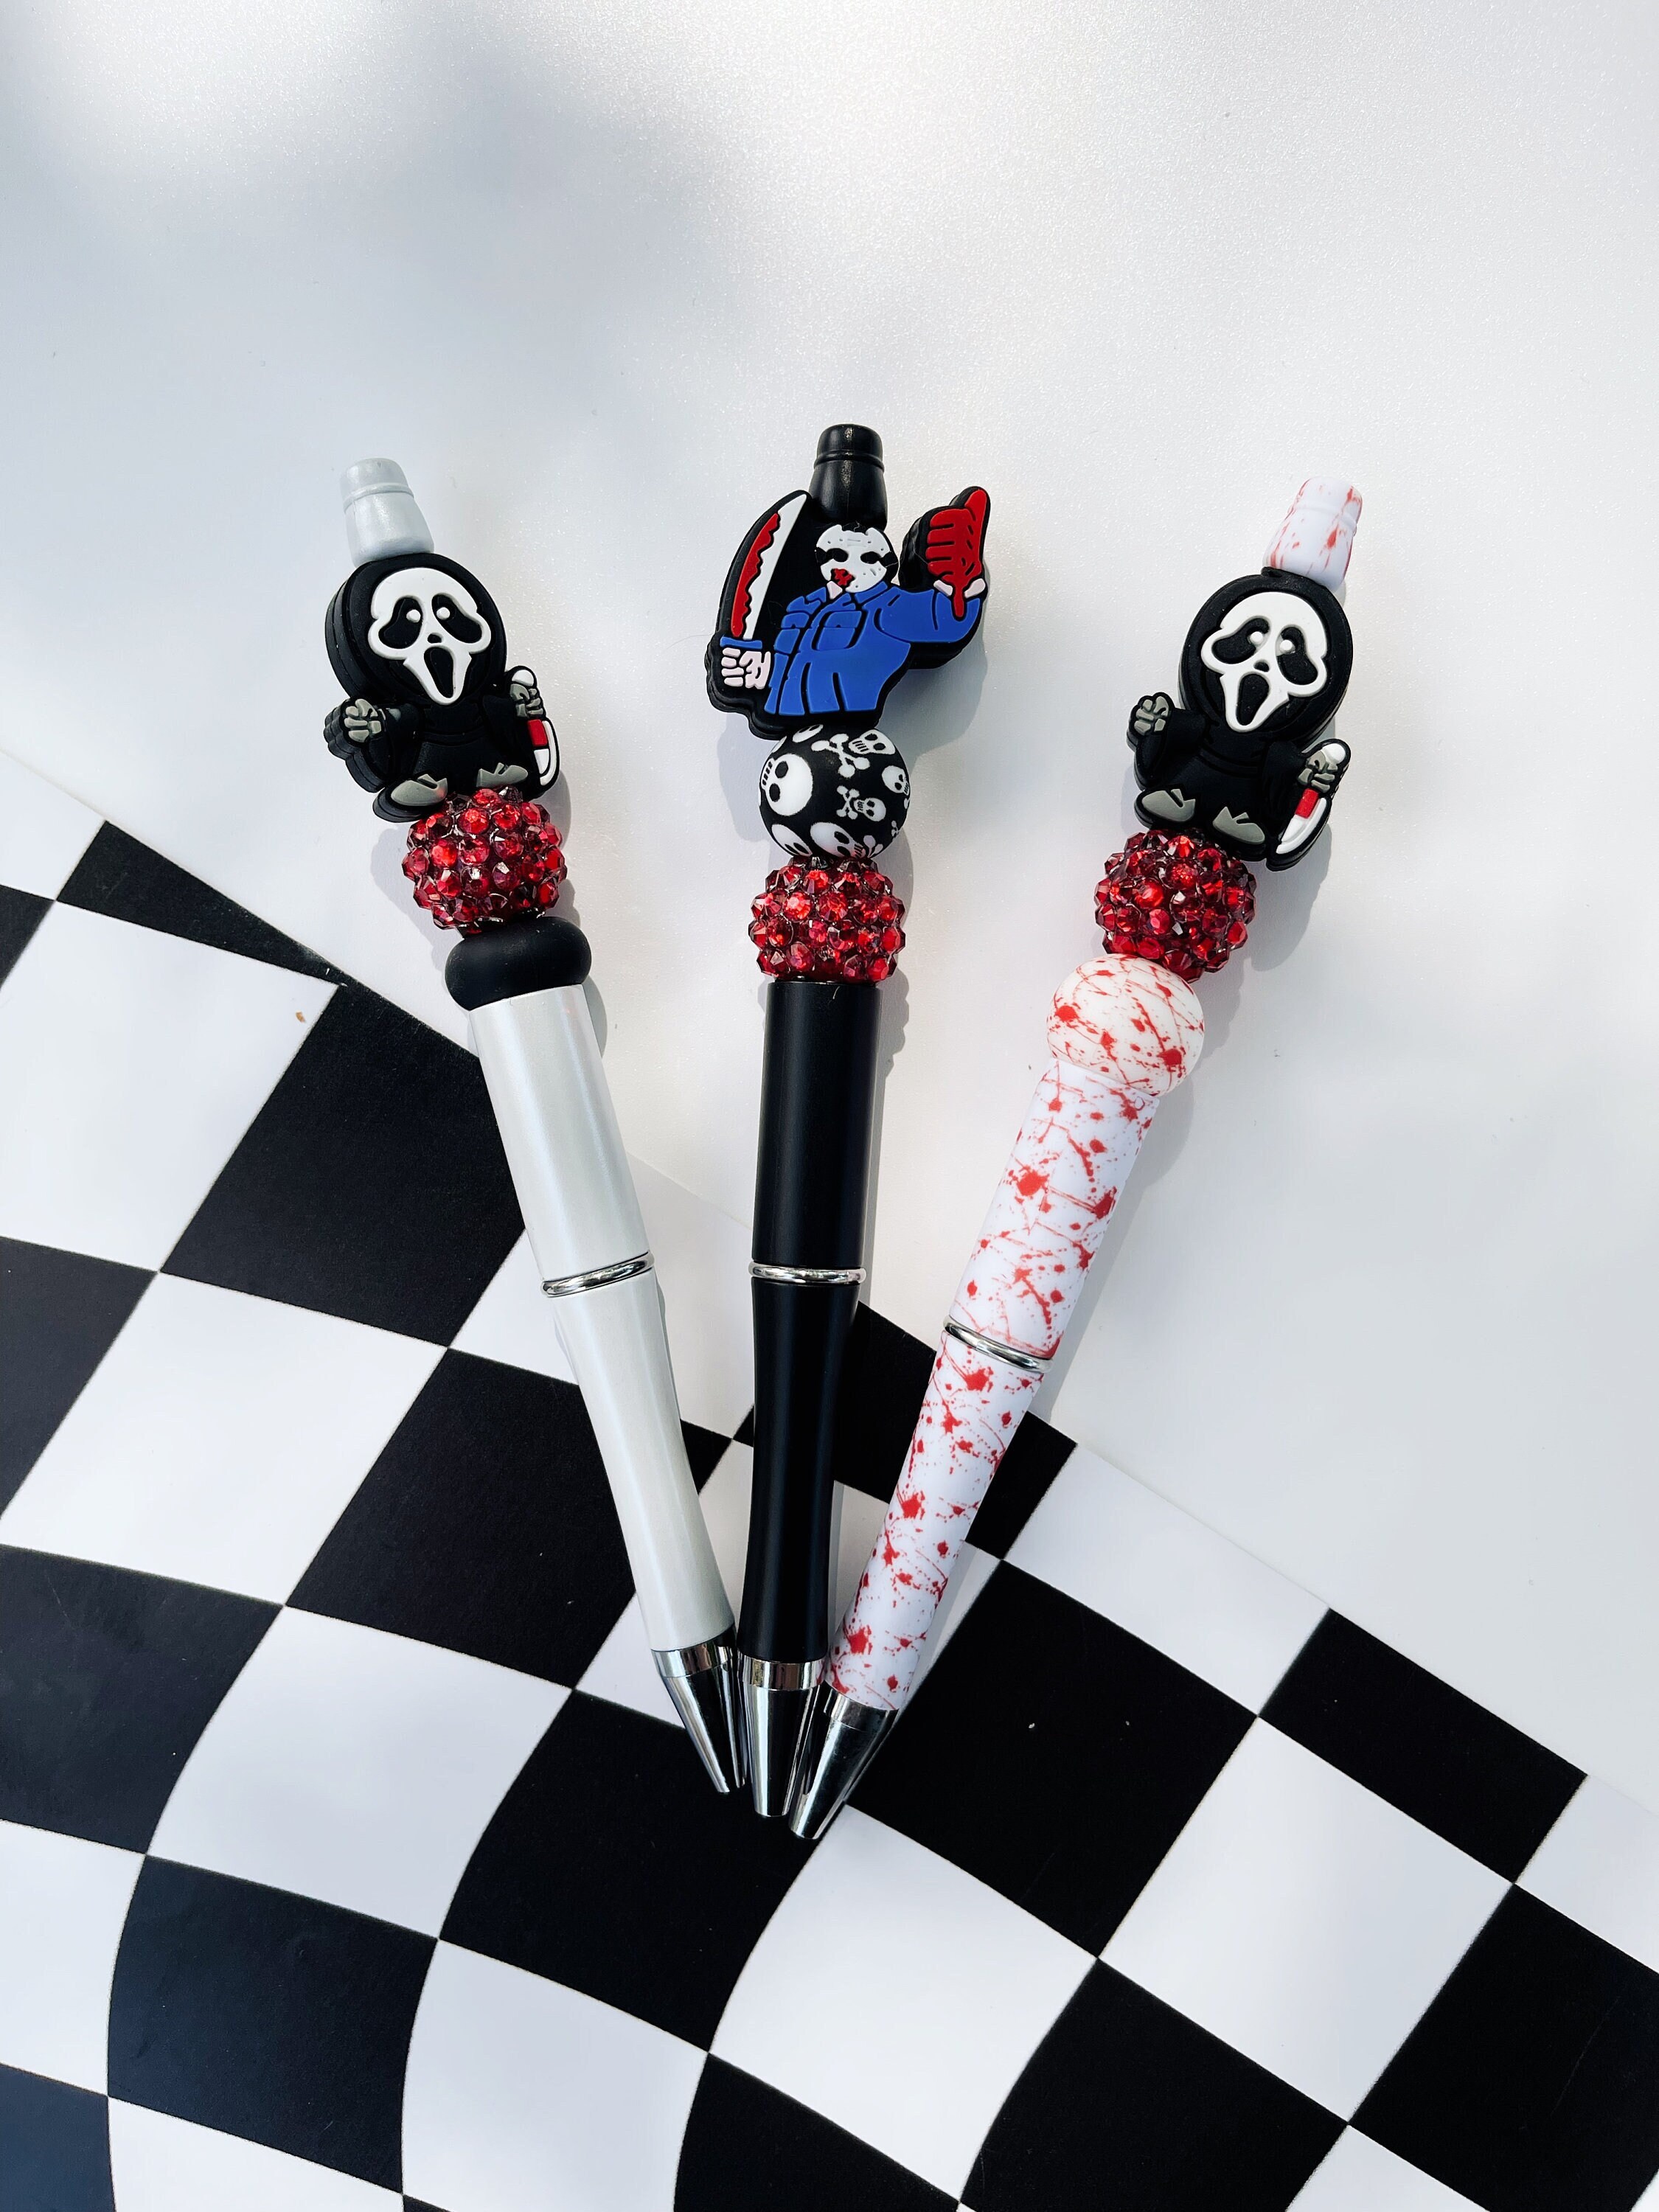 3 Sizes Art Ruling Pen Set, 3 Packs -hinged Masking Fluid Pen, Straight  Line Pen For Drawing Mounti